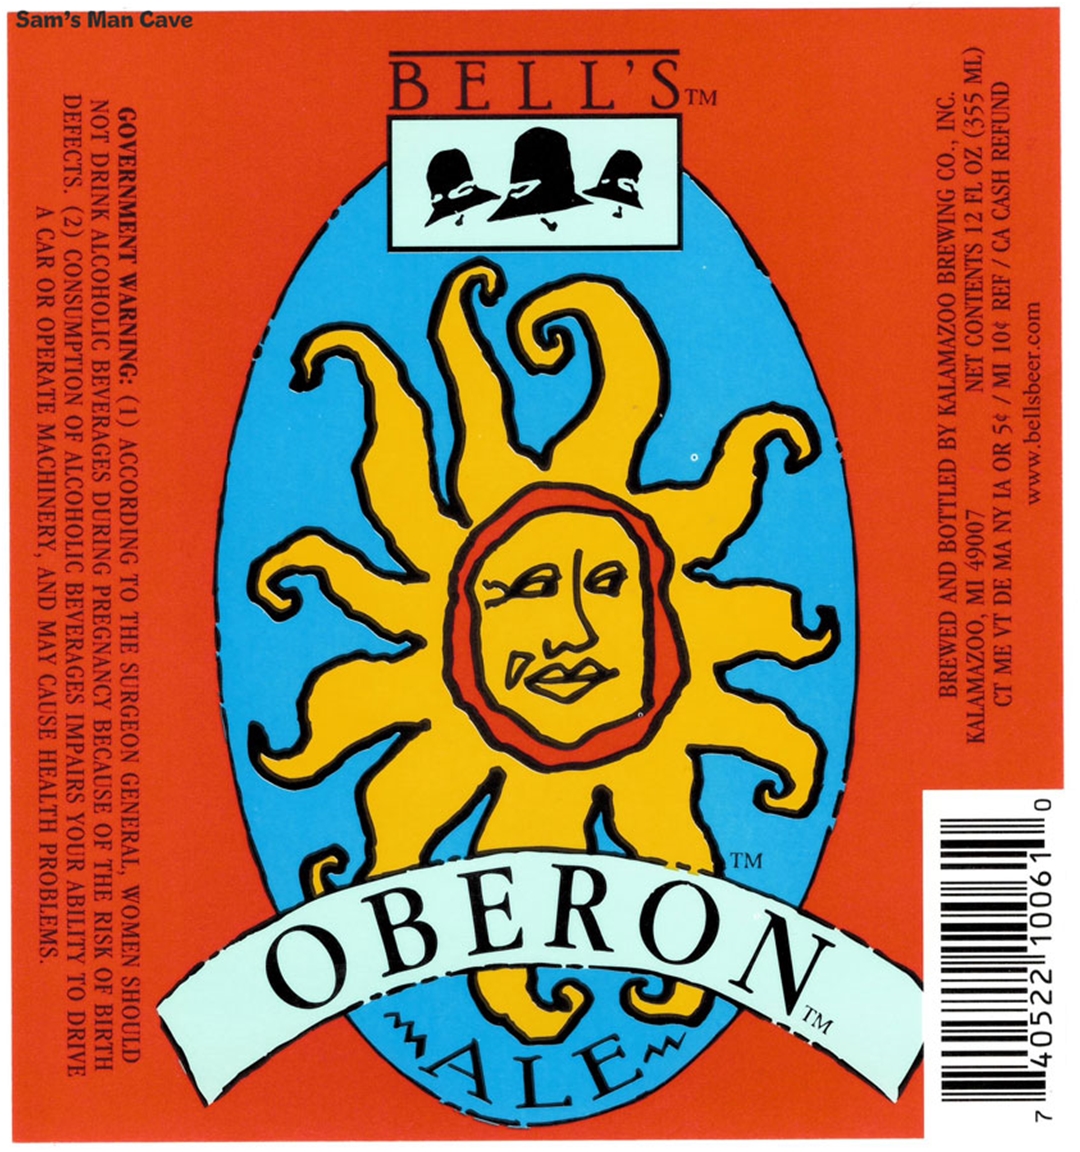 Bell's Oberon Ale Label